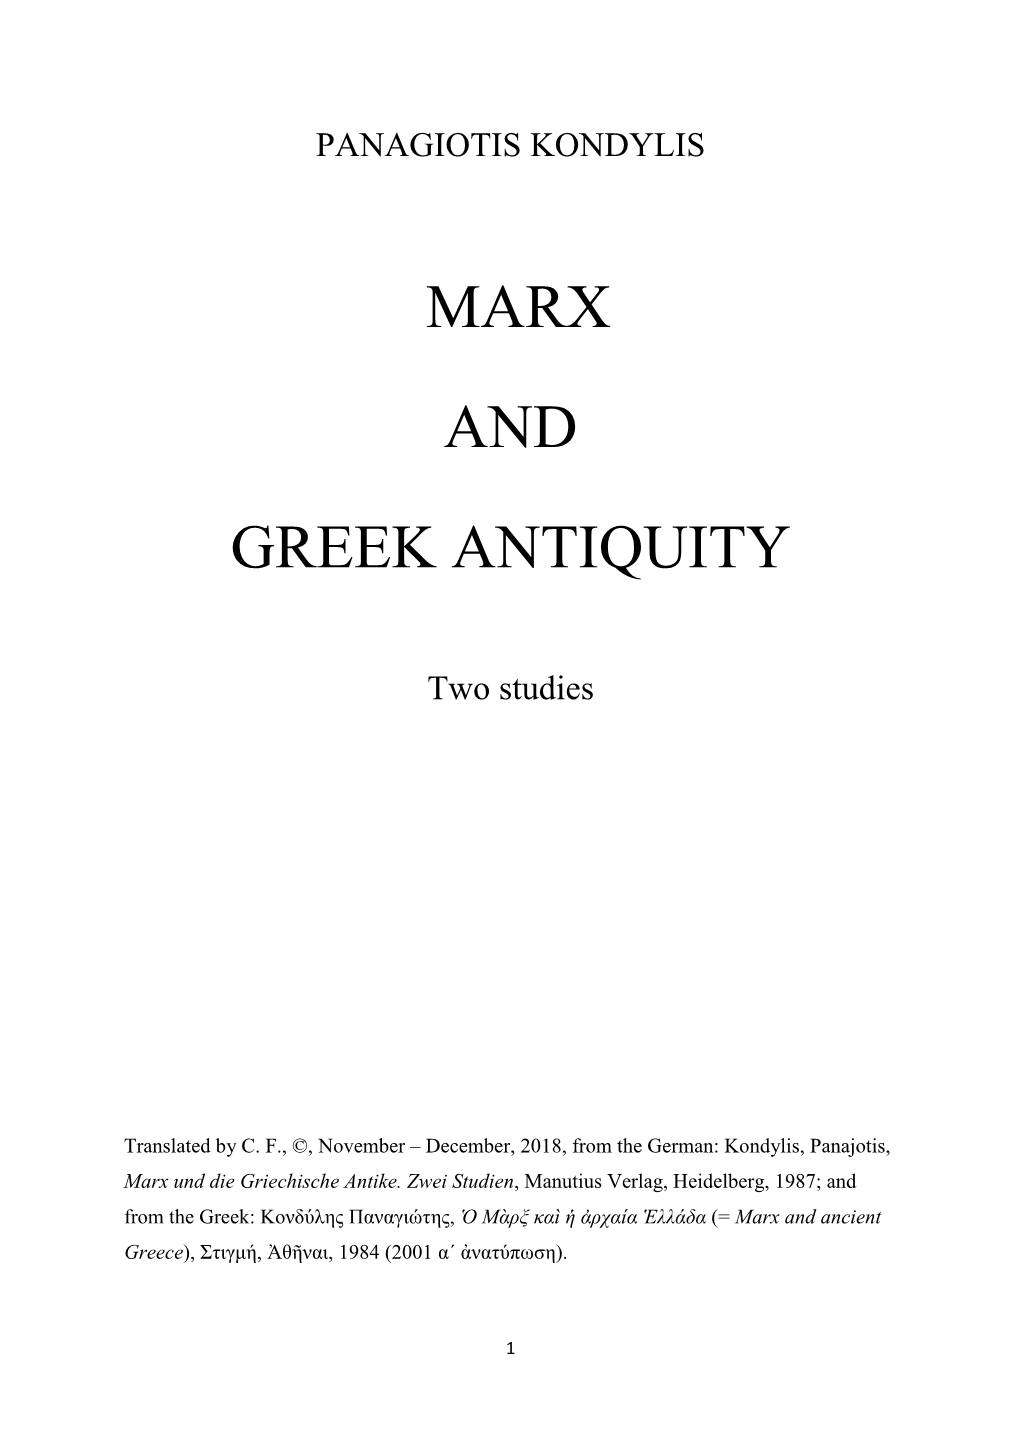 Marx and Greek Antiquity